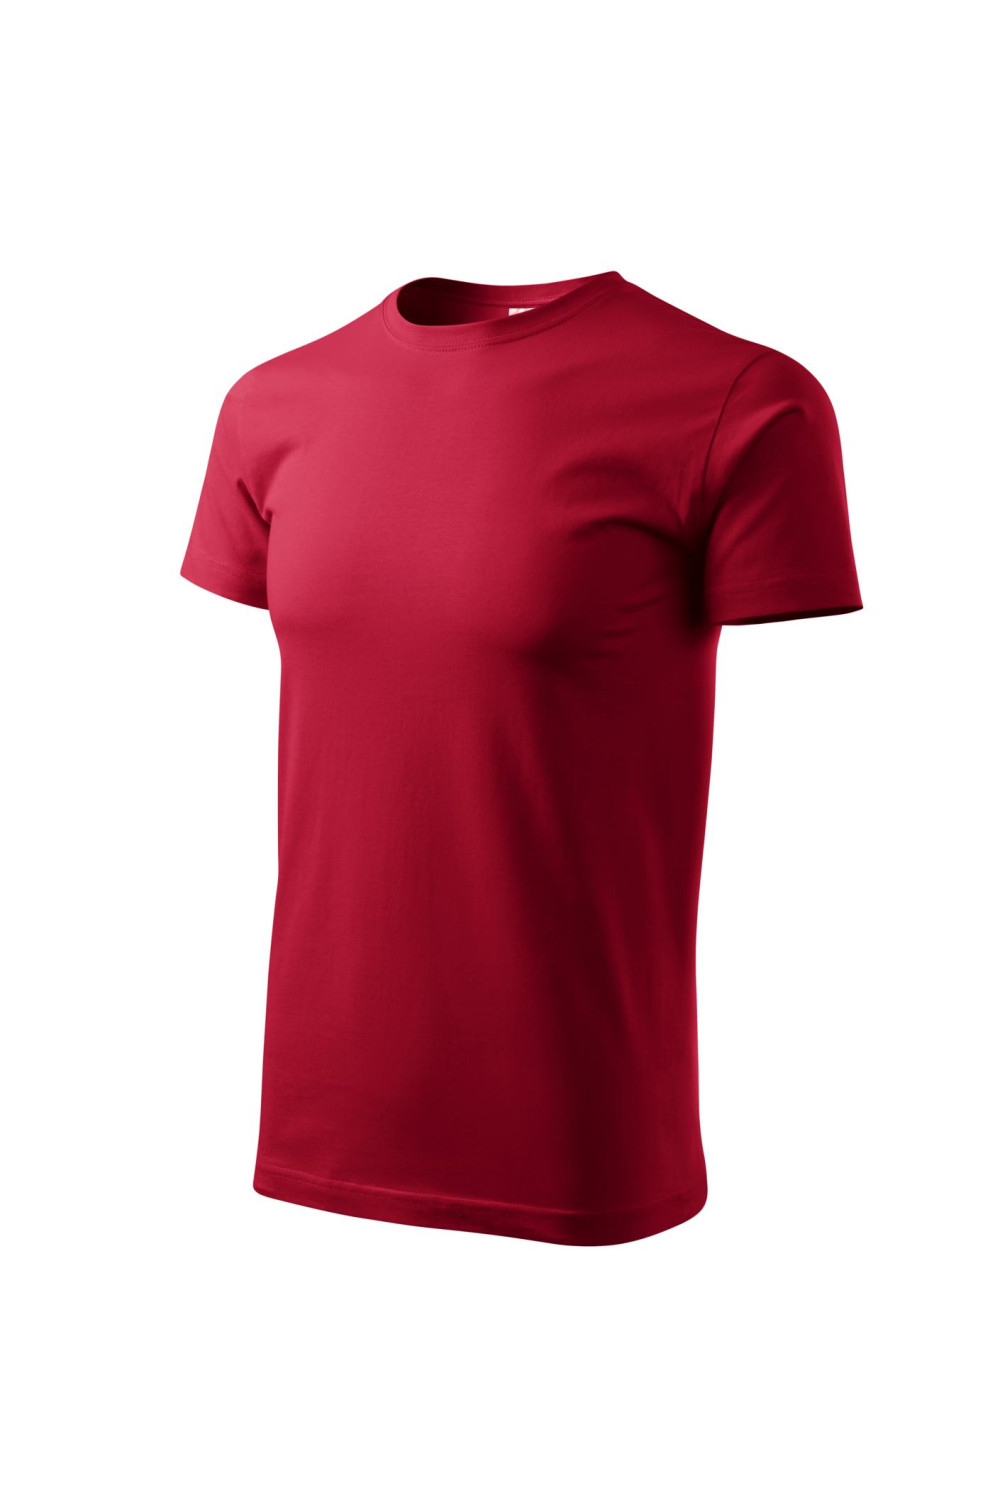 Koszulka męska 100% bawełna BASIC 129  kolor marlboro czerwony